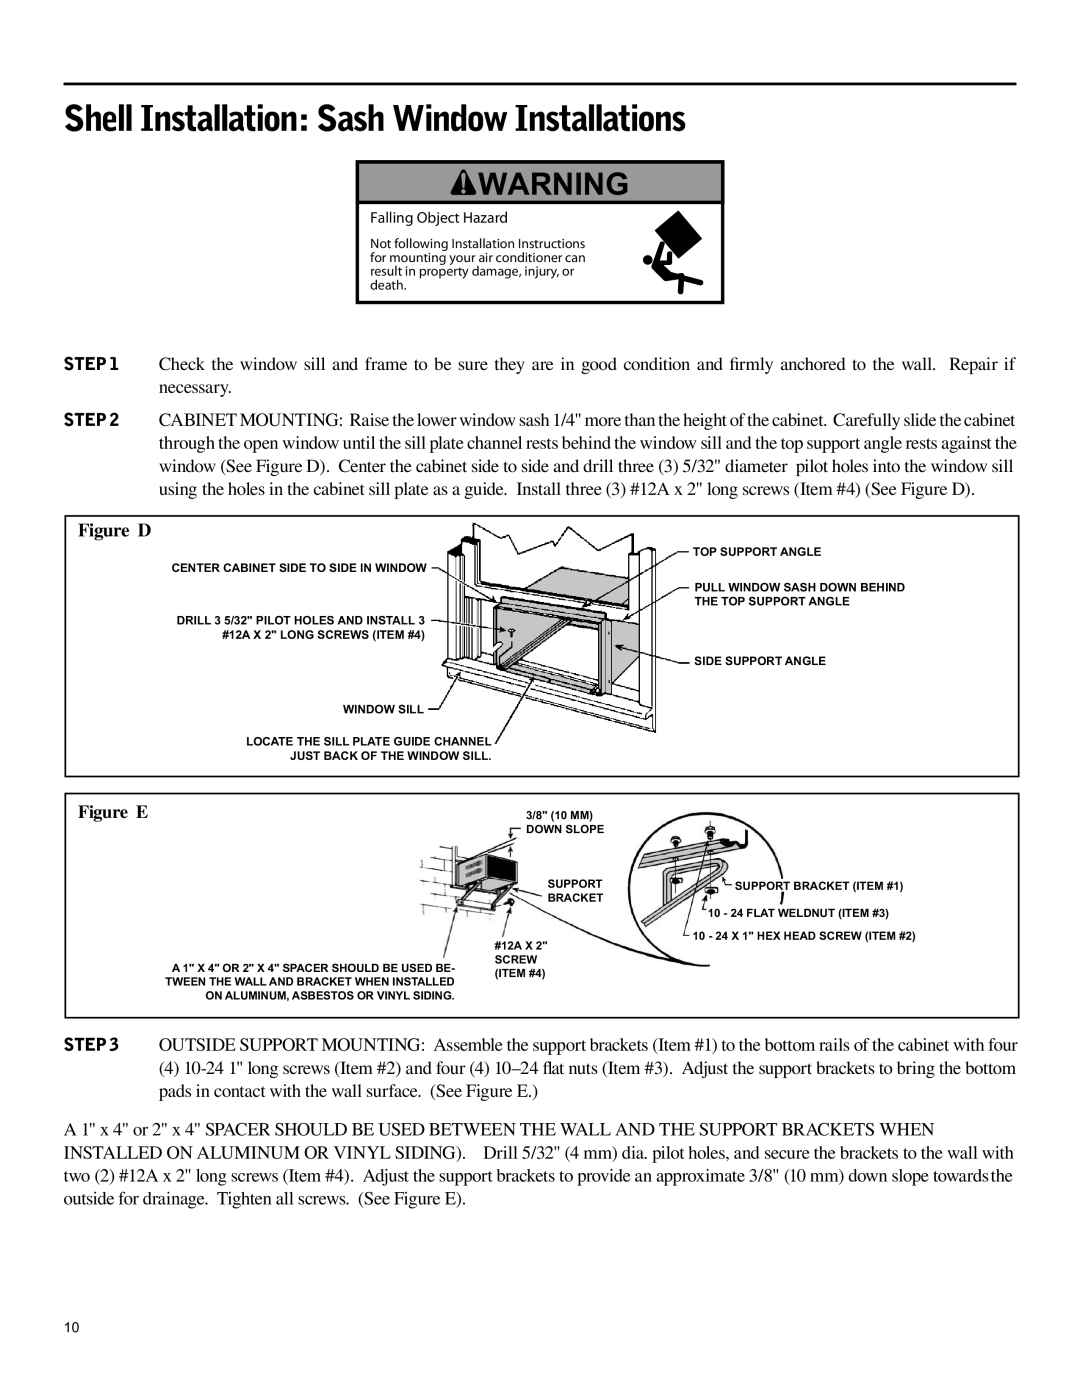 Friedrich SH15 operation manual Shell Installation: Sash Window Installations, Falling Object Hazard 